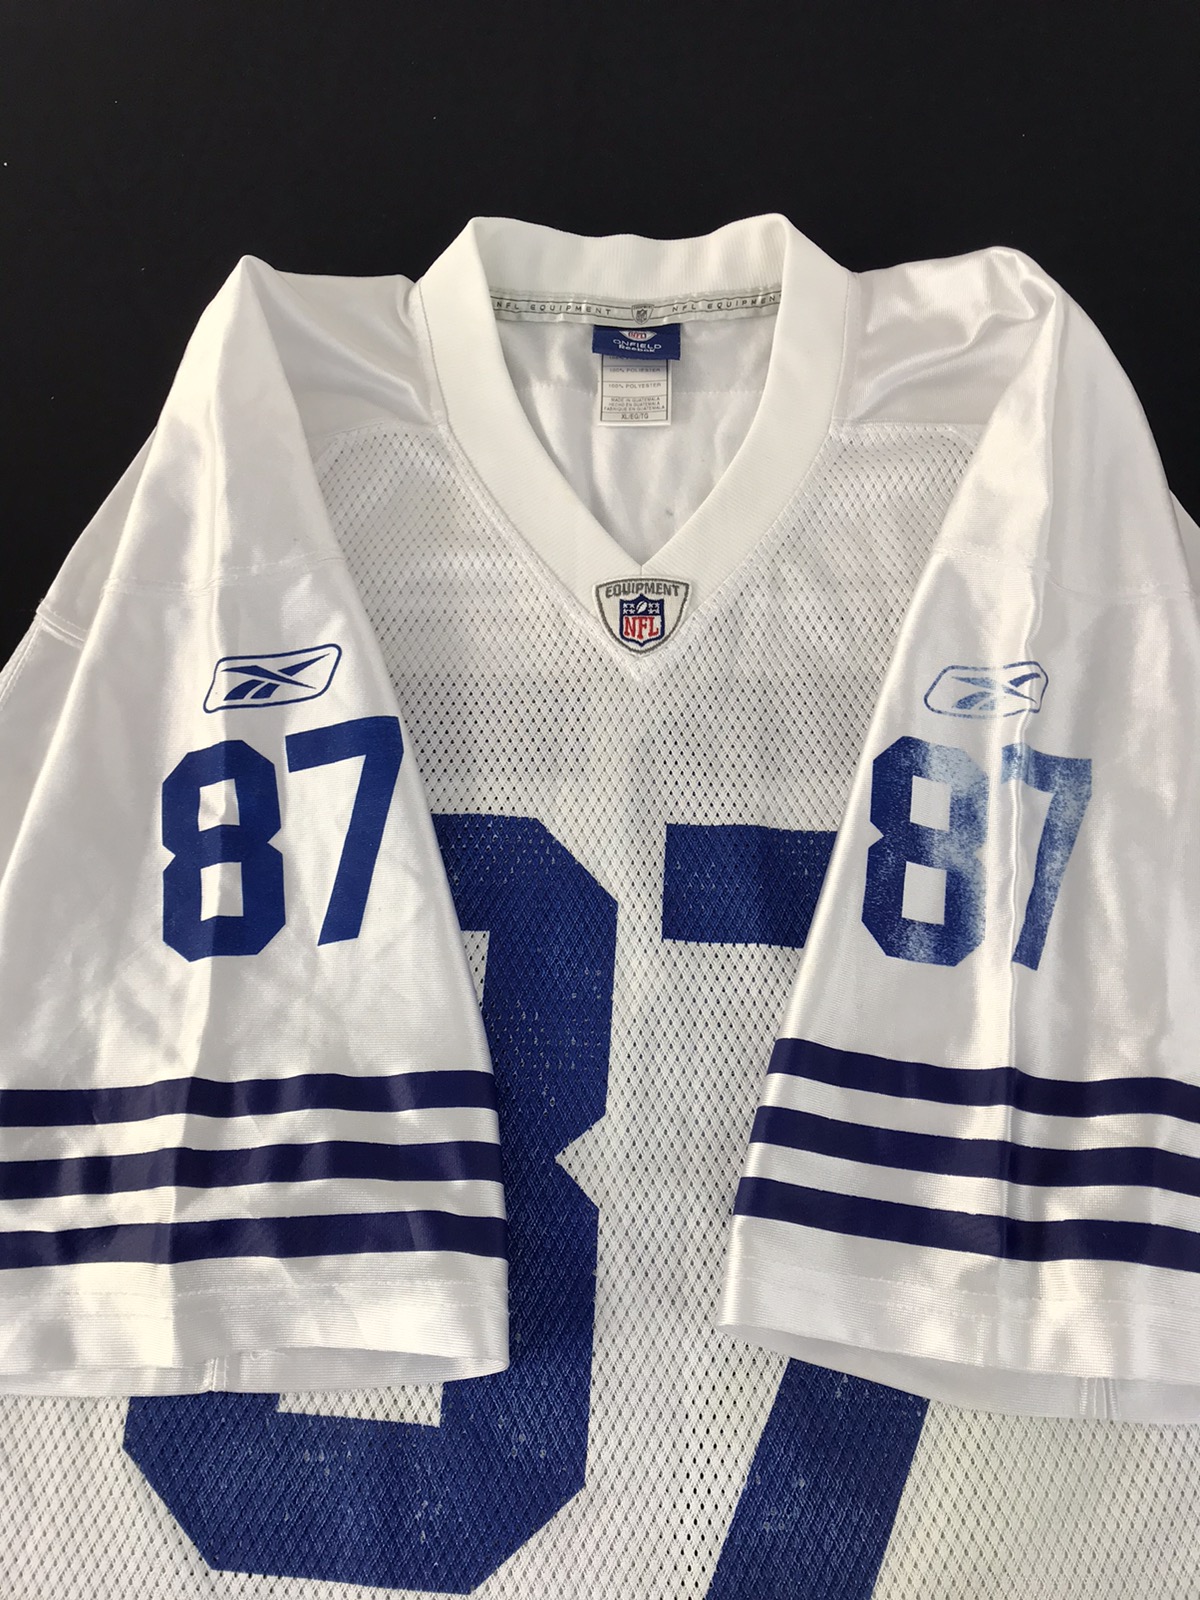 Vintage - Reebok NFL Player Reggie Wayne 87 Indianapolis Colts Jerseys - 5